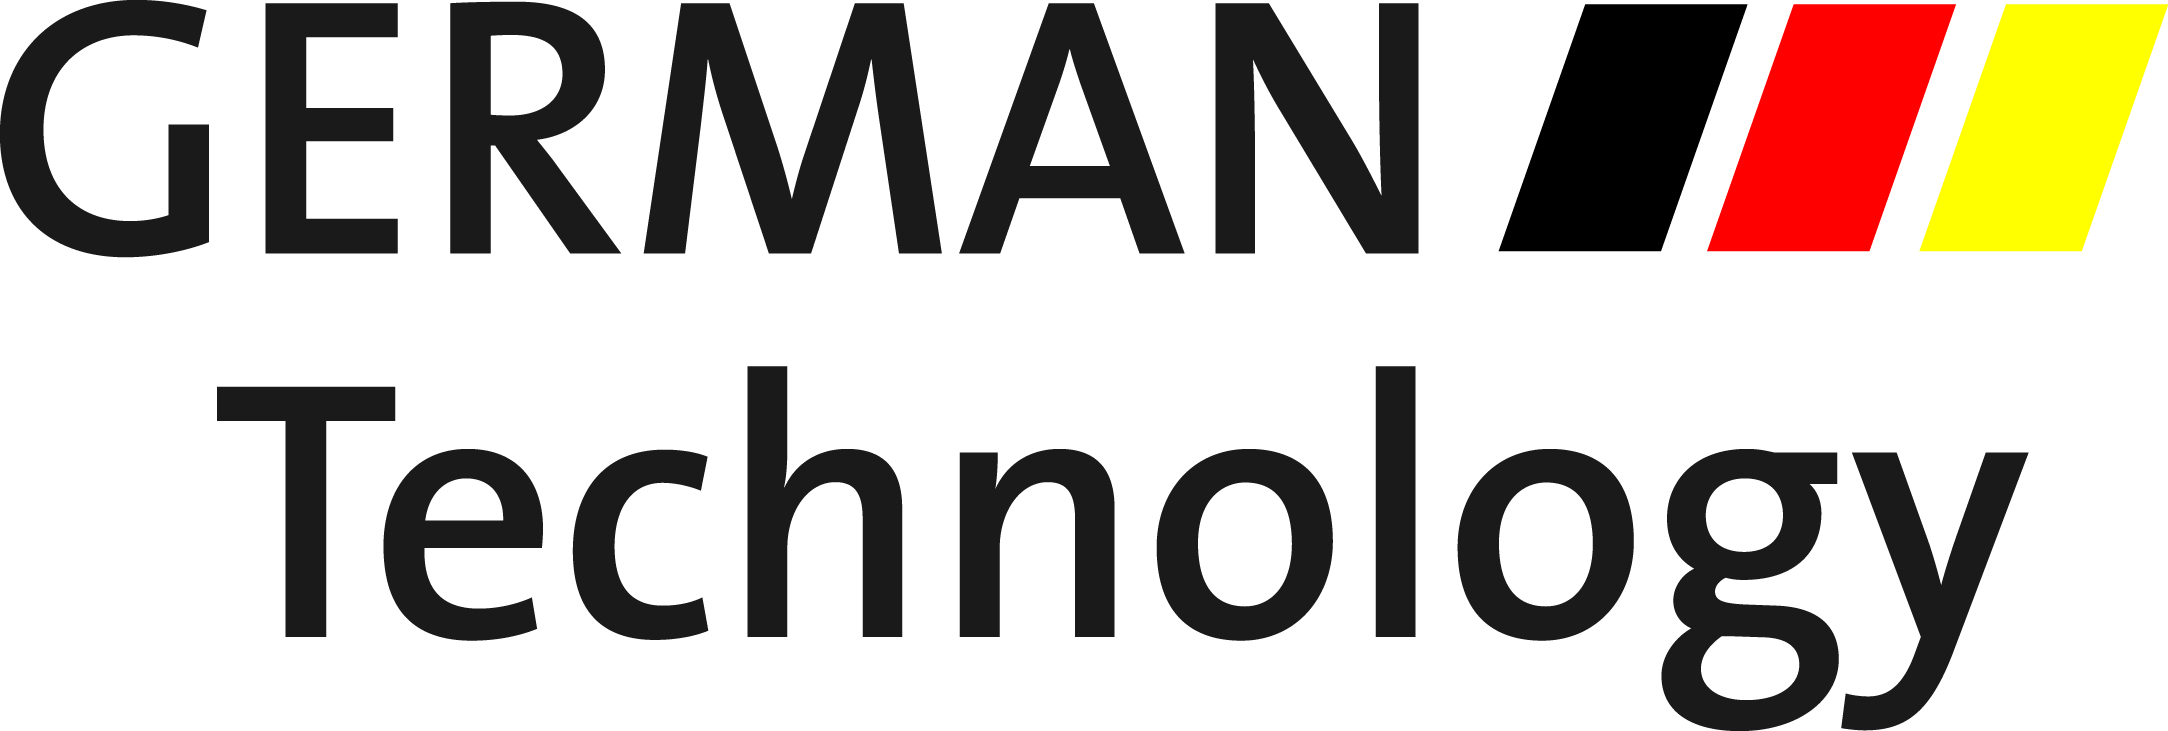 logo_german_technology.jpg